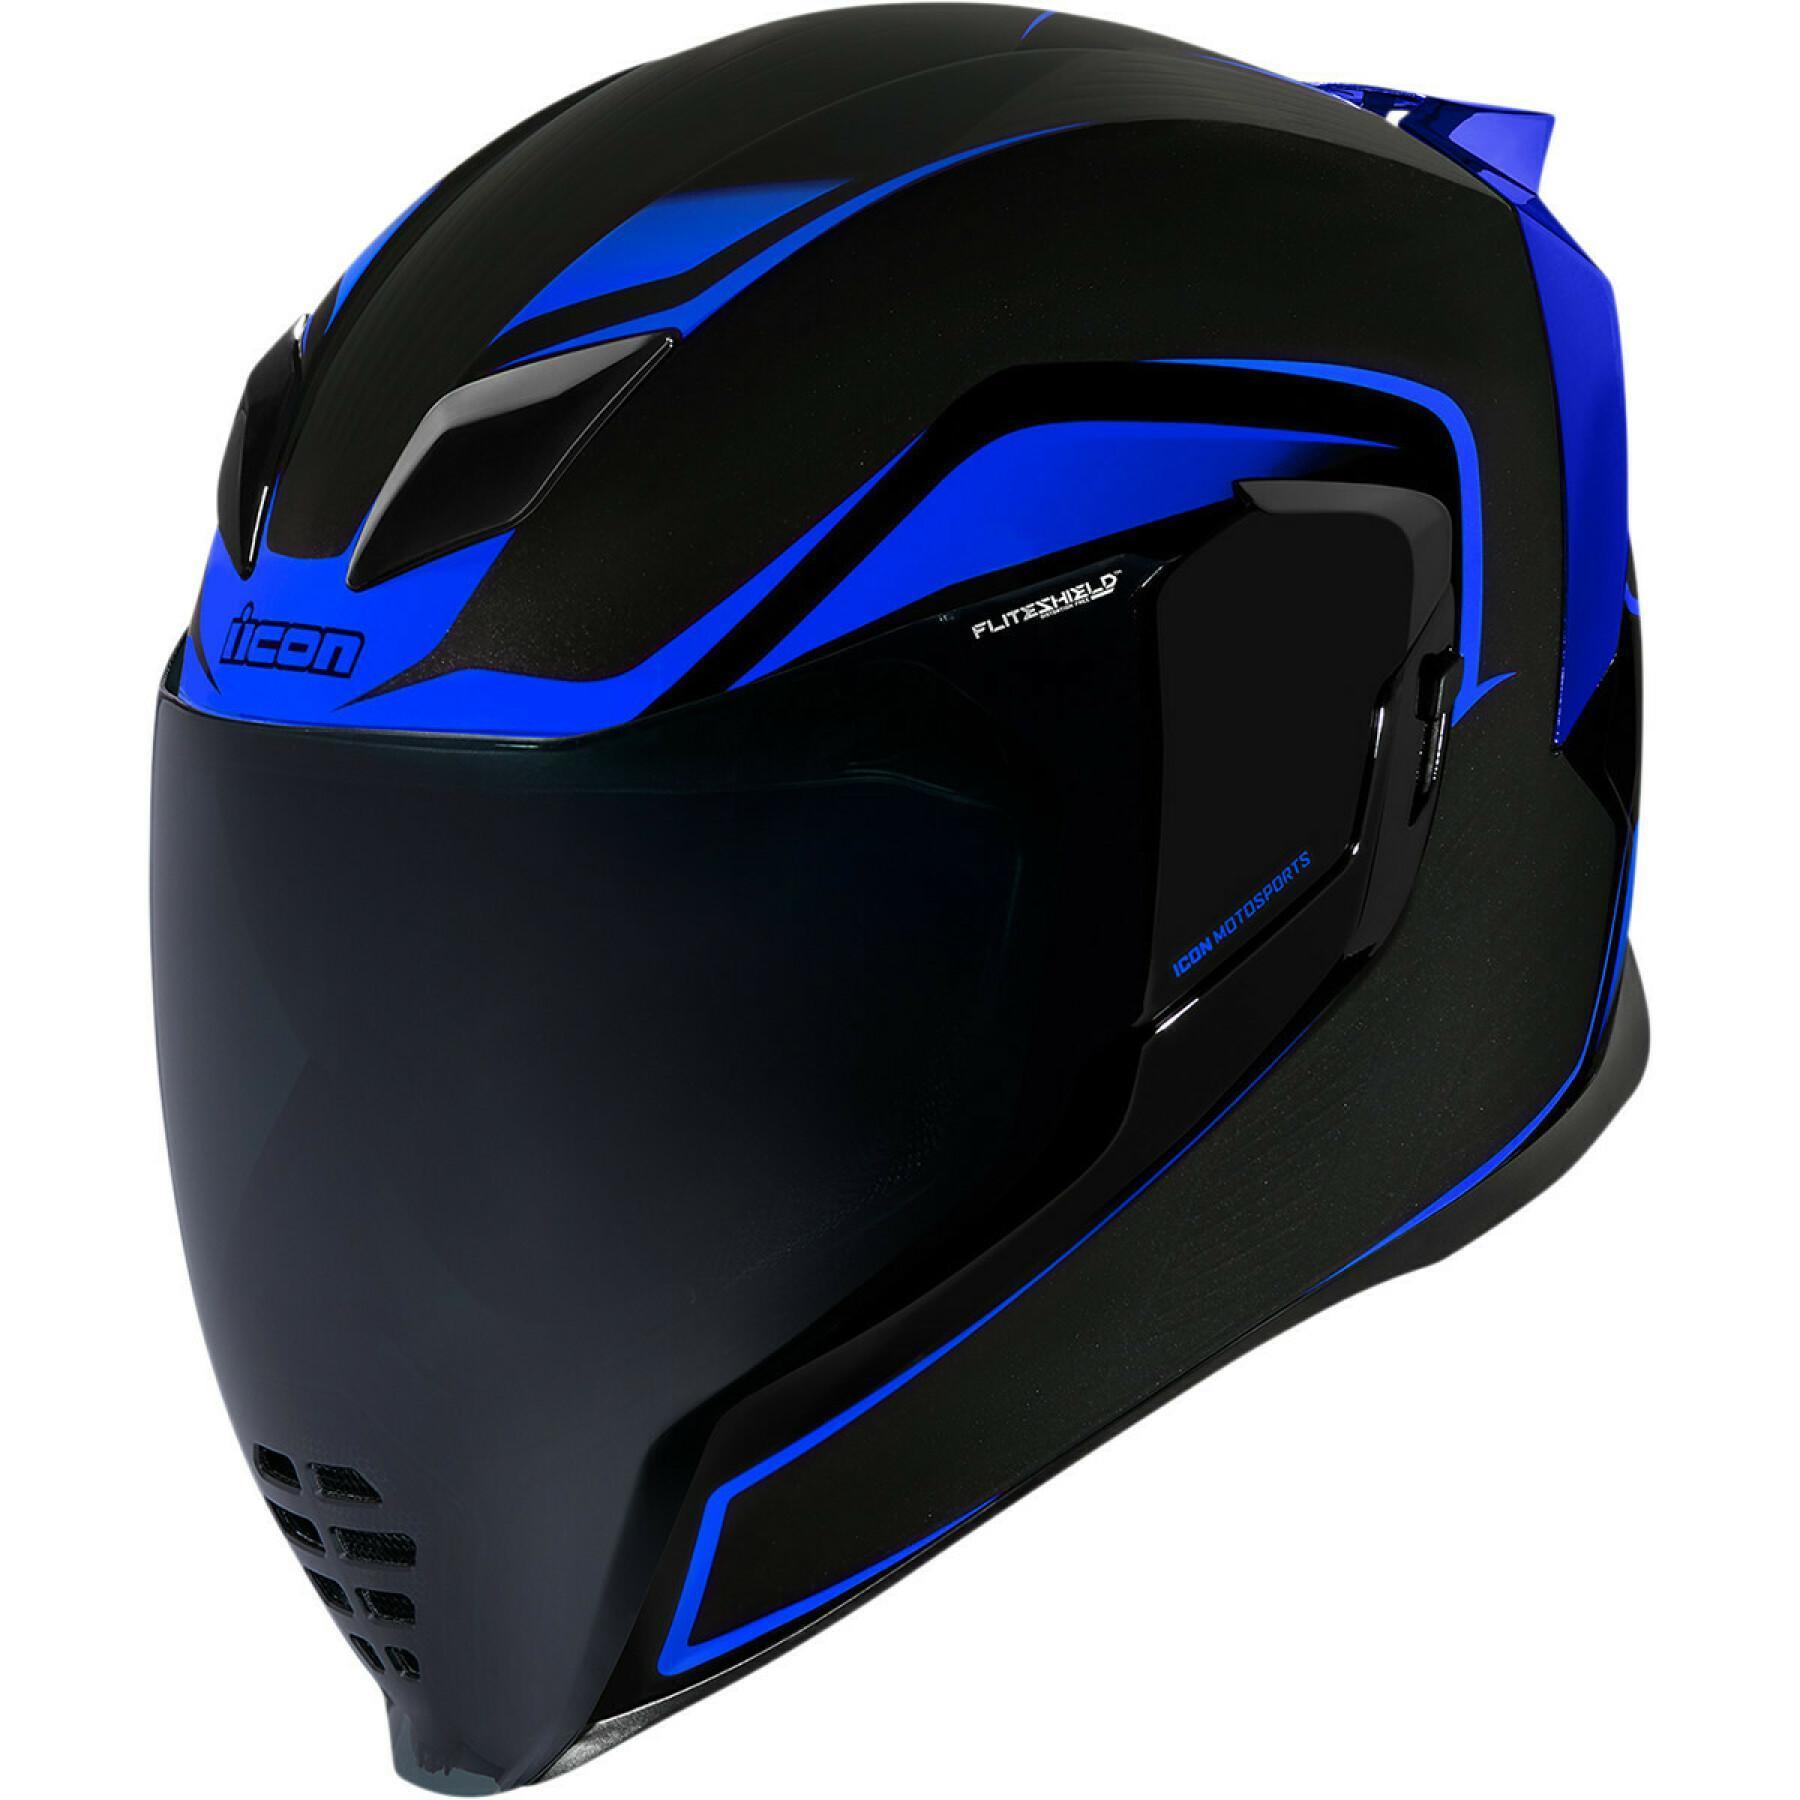 Full face motorcycle helmet Icon aflt crosslink